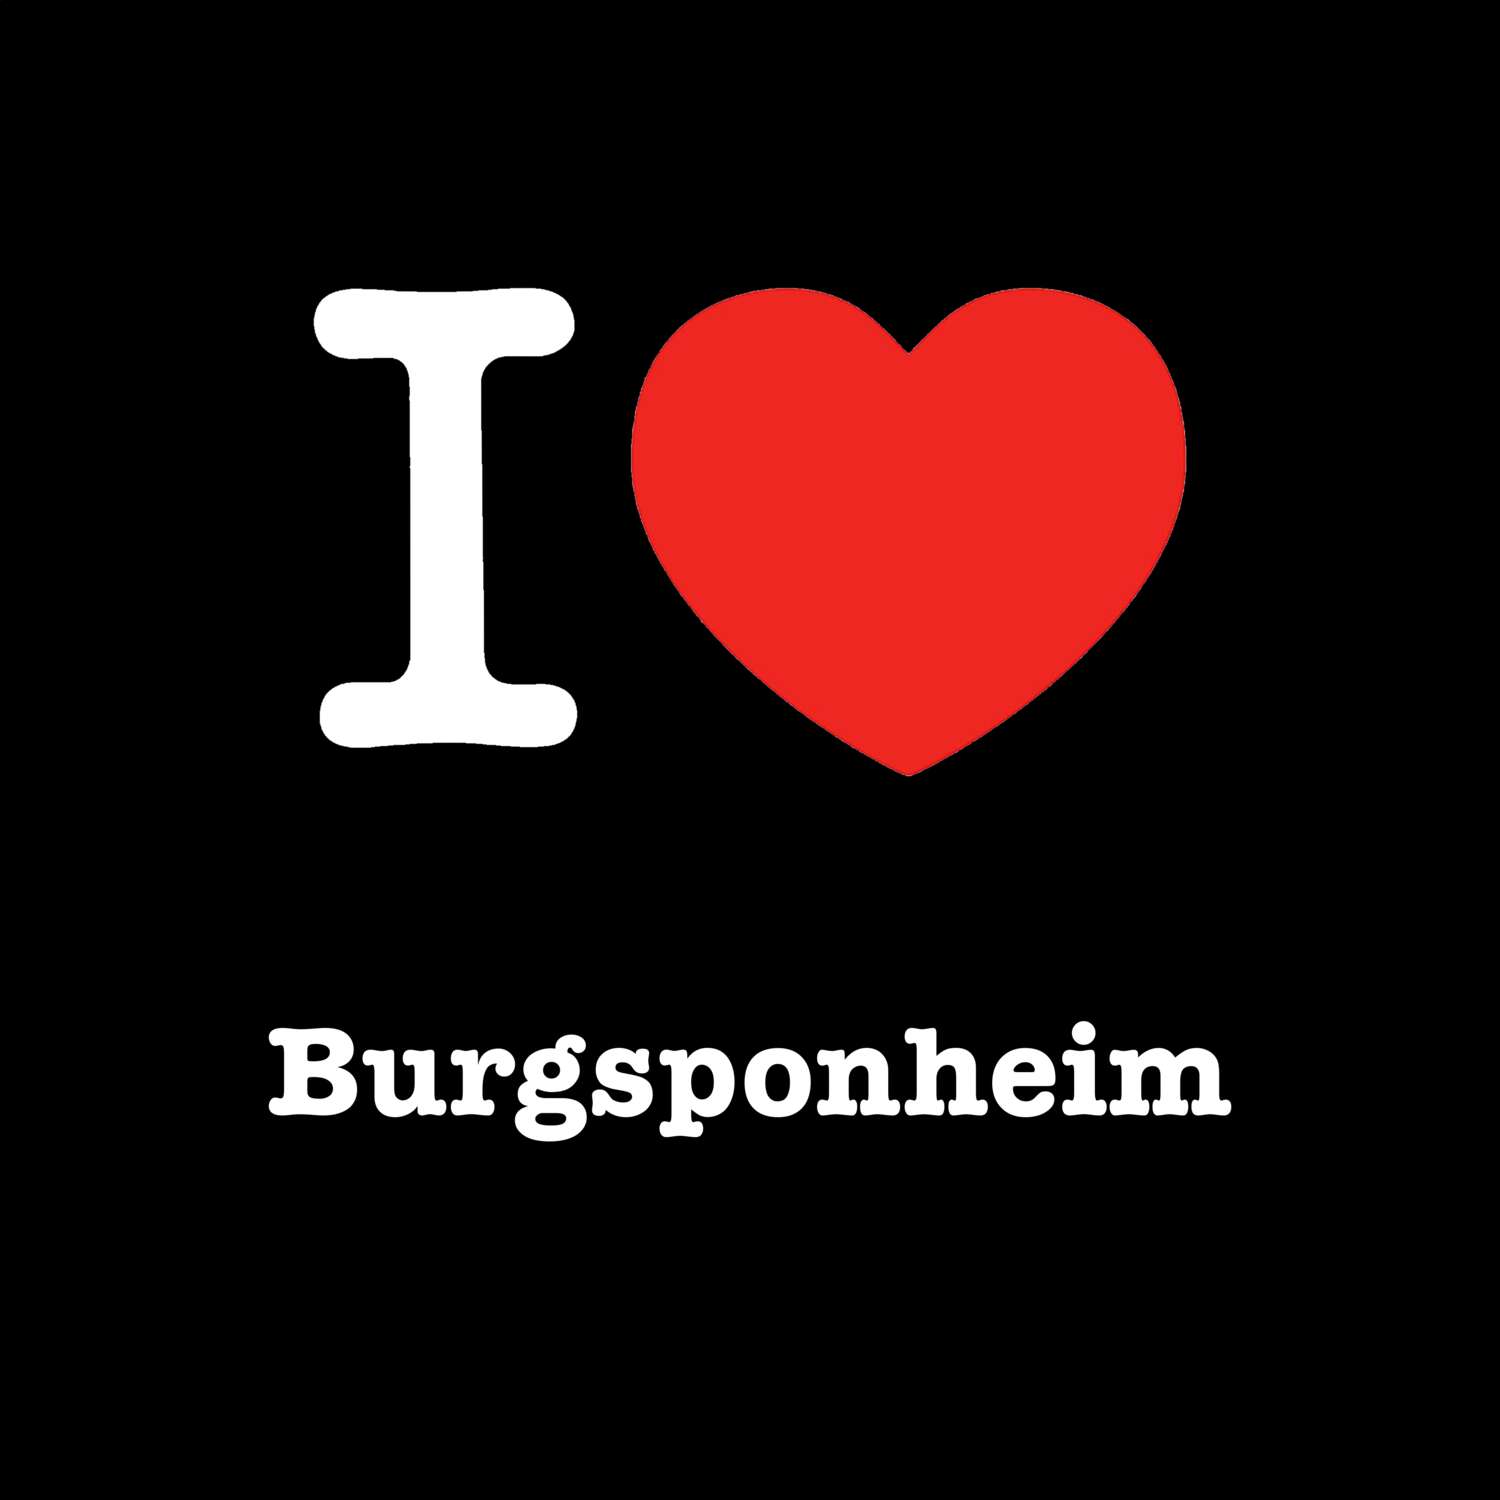 Burgsponheim T-Shirt »I love«